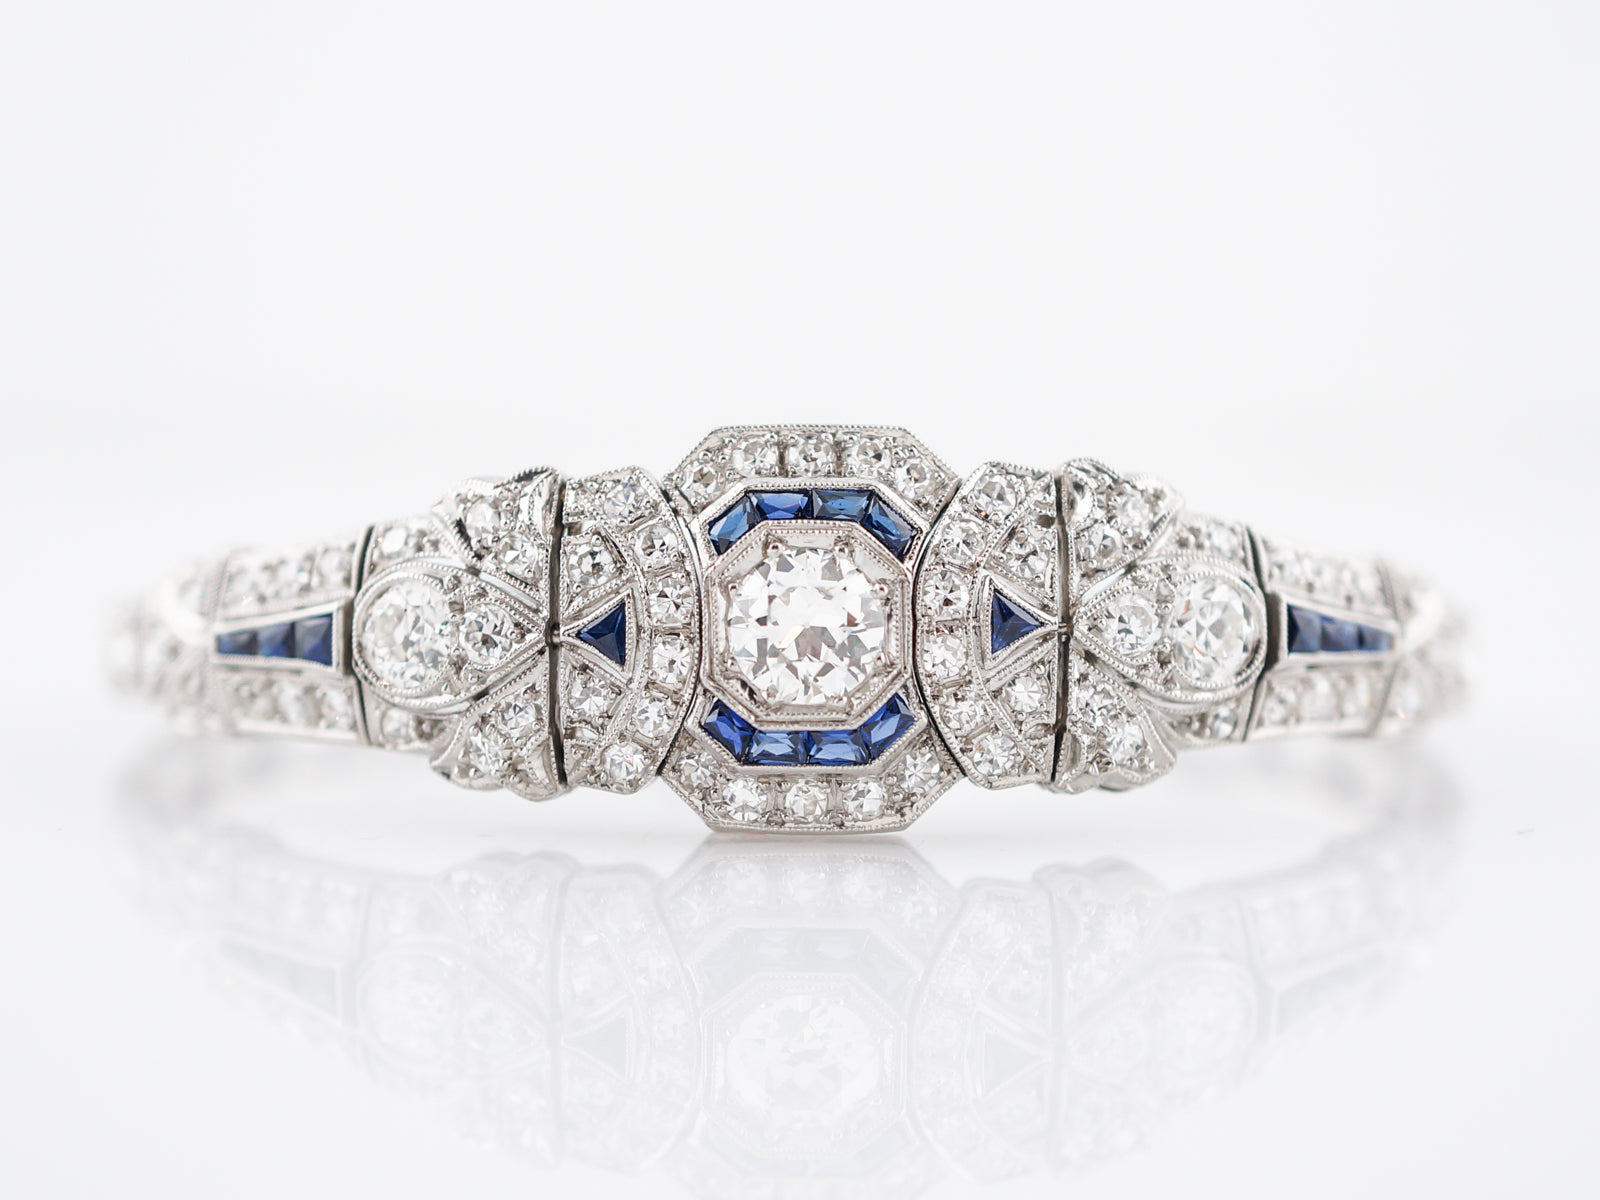 Bracelet Modern Art Deco Style 4.55 Old European Cut Diamonds & .96 Sapphire in Platinum